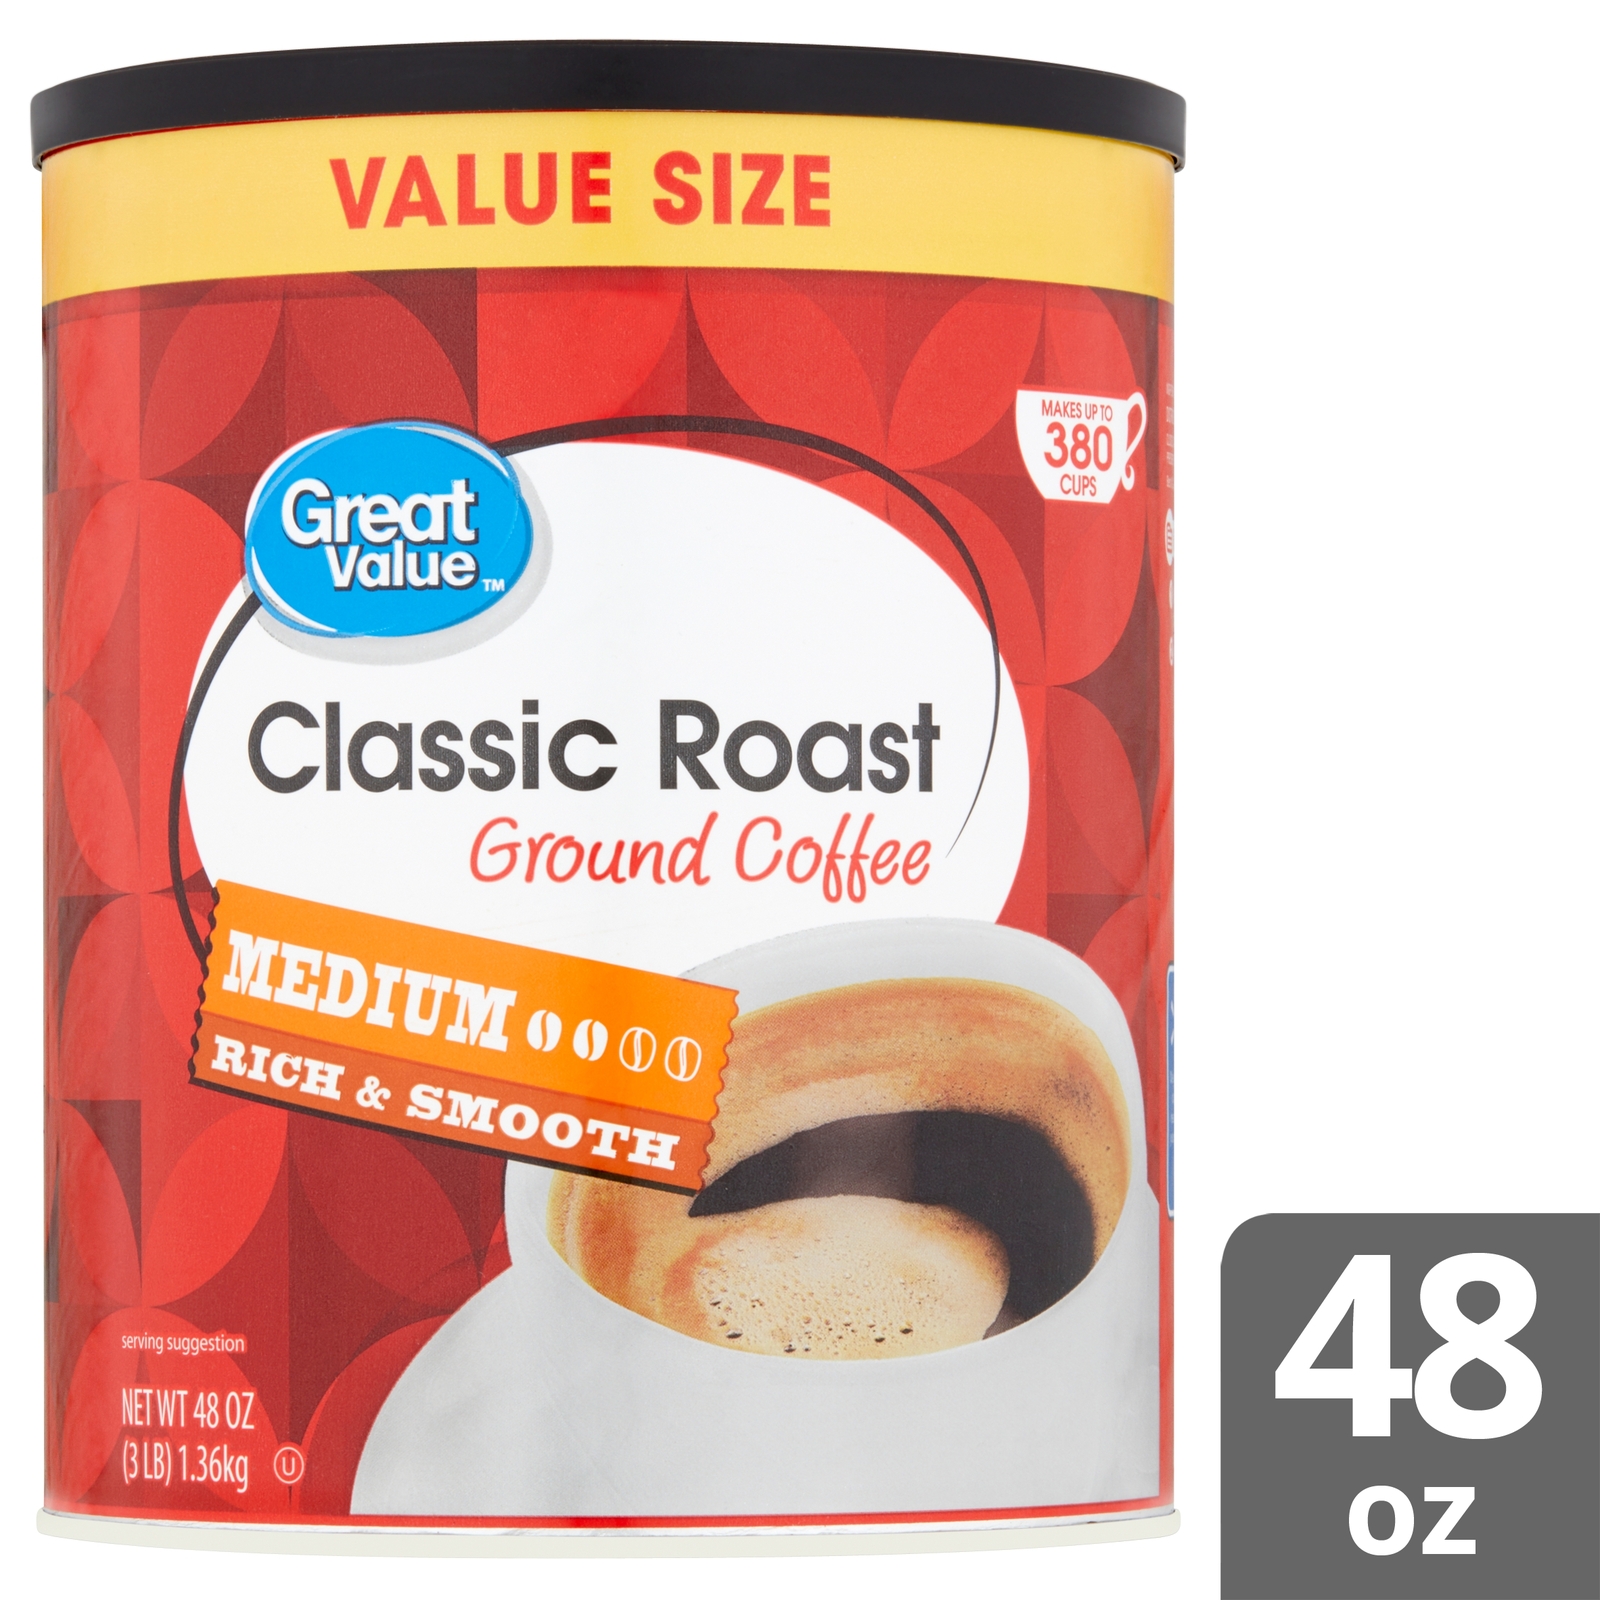 Great Value Classic Roast Medium Ground Coffee Value Size, 48 oz - $28.00